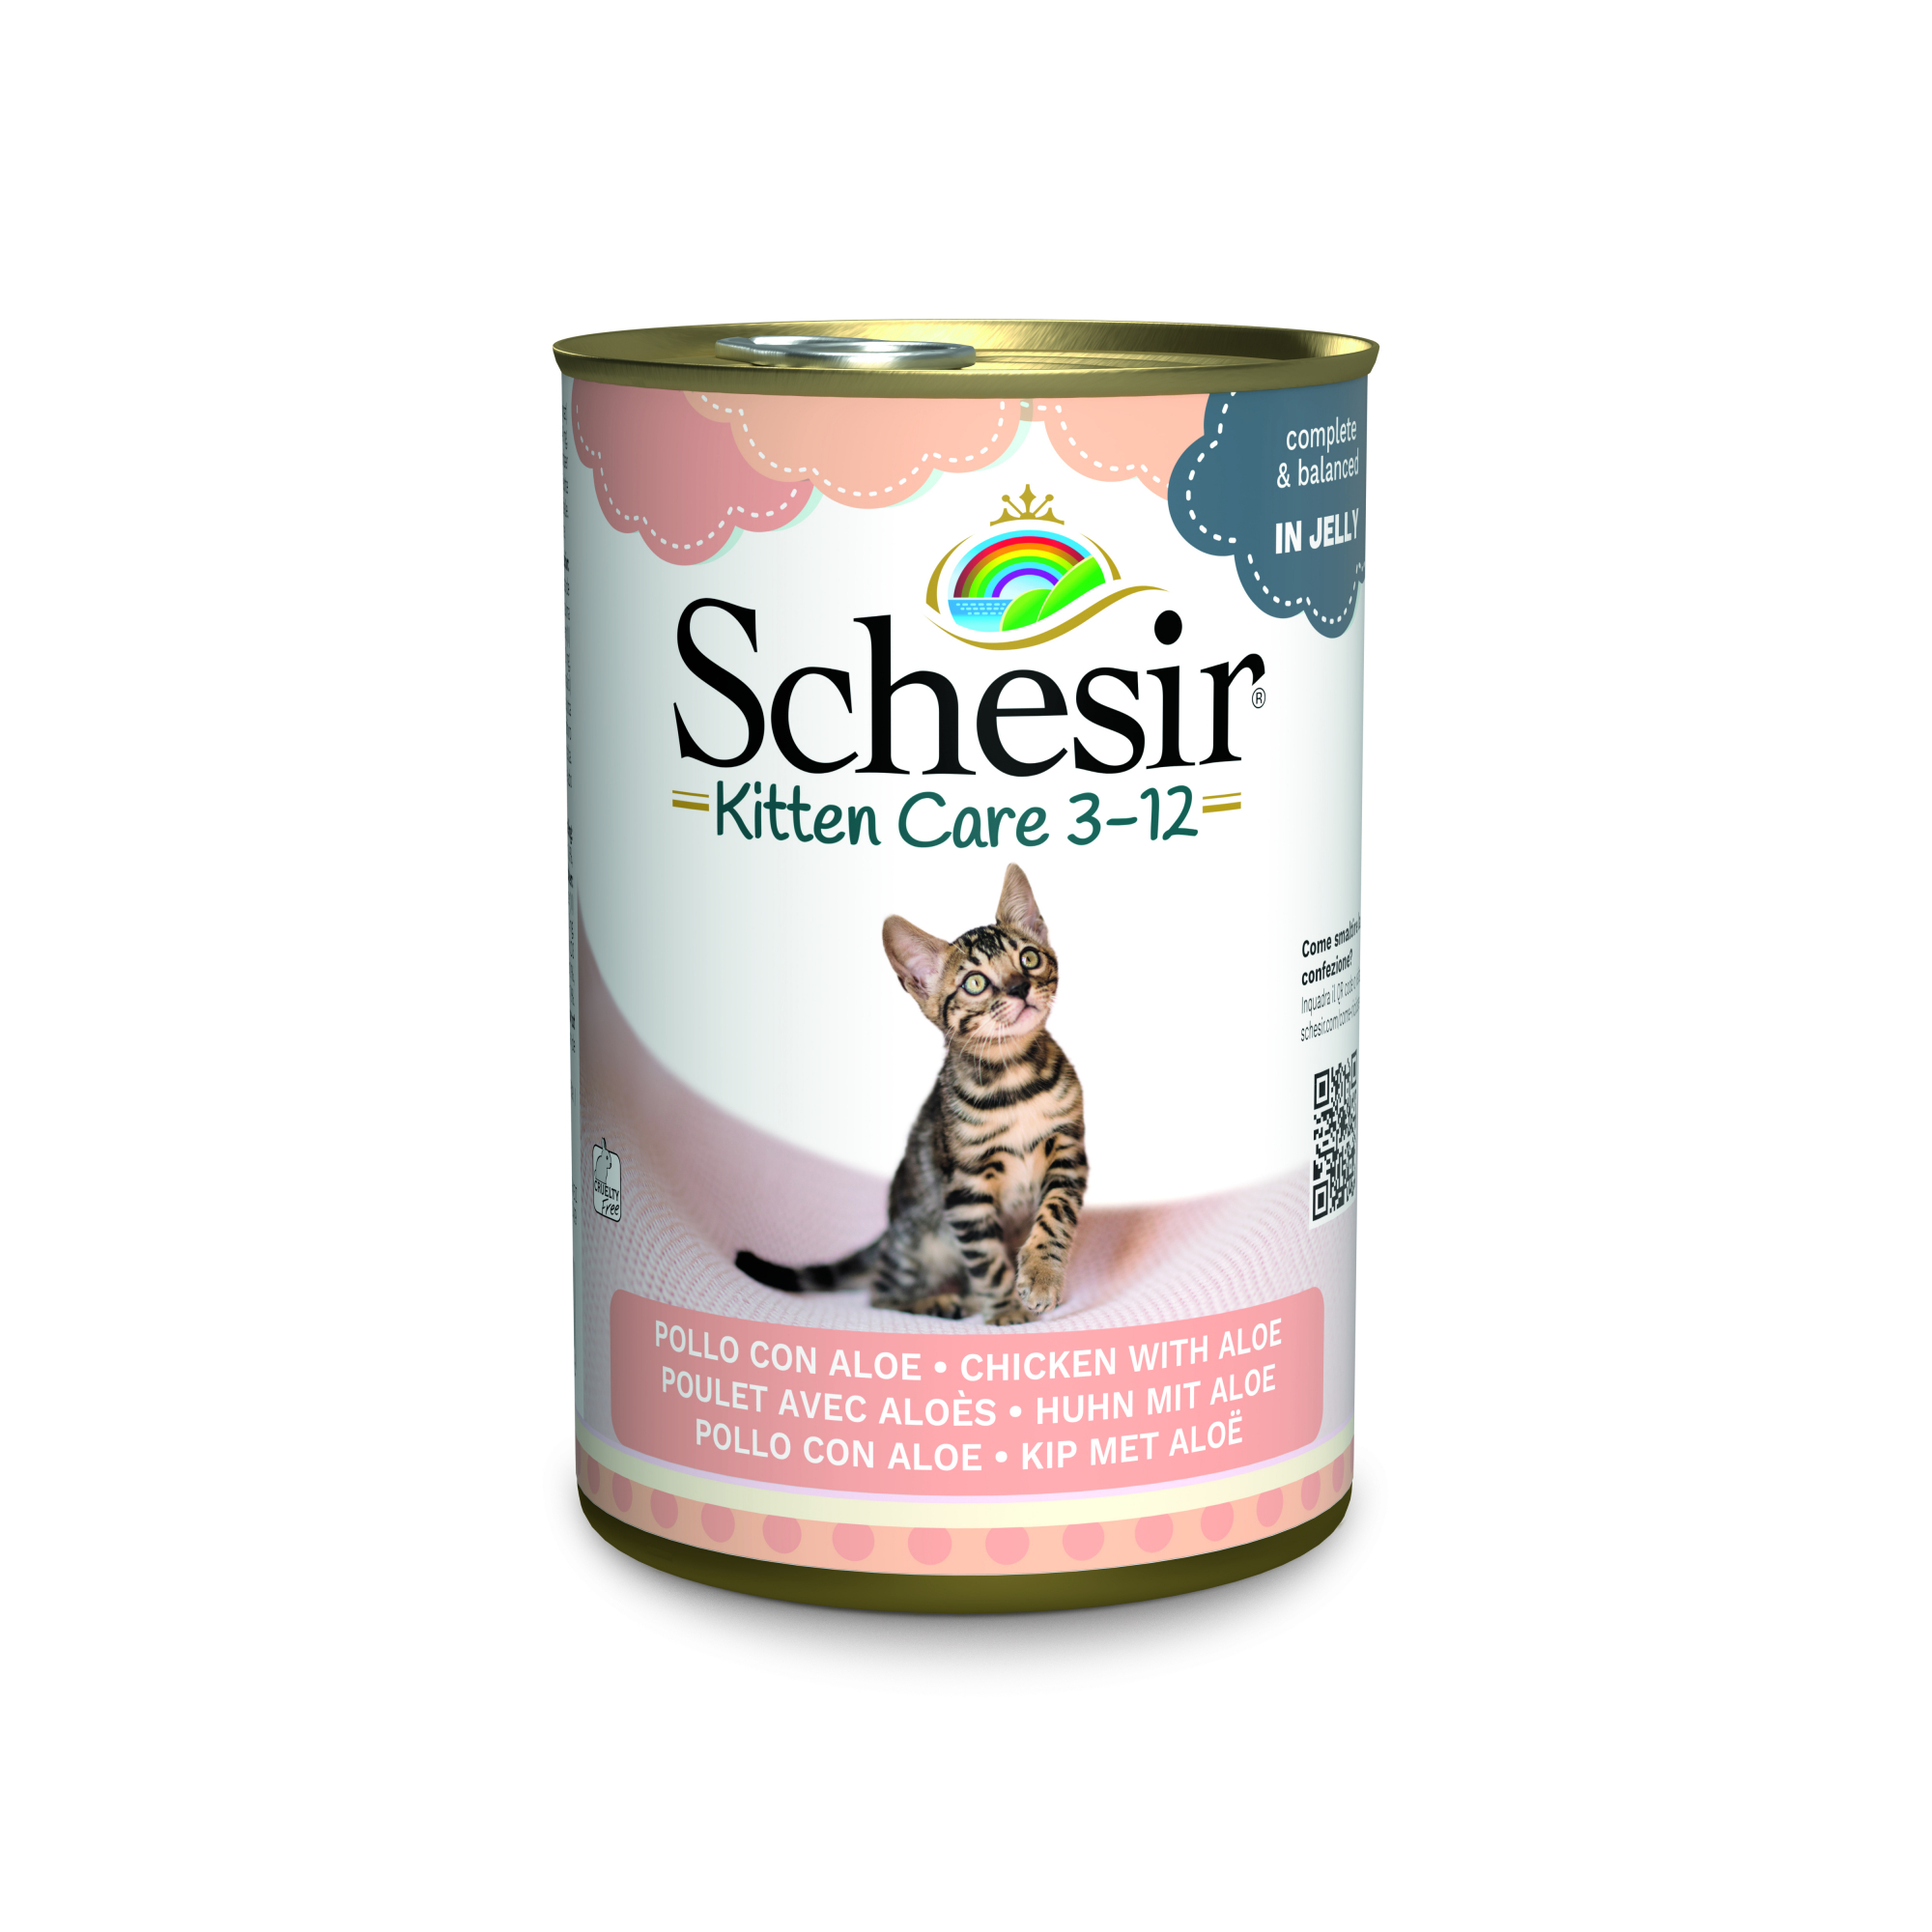 SCHESIR Kitten Comida húmeda para gatitos en gelatina 140g - 2 recetas